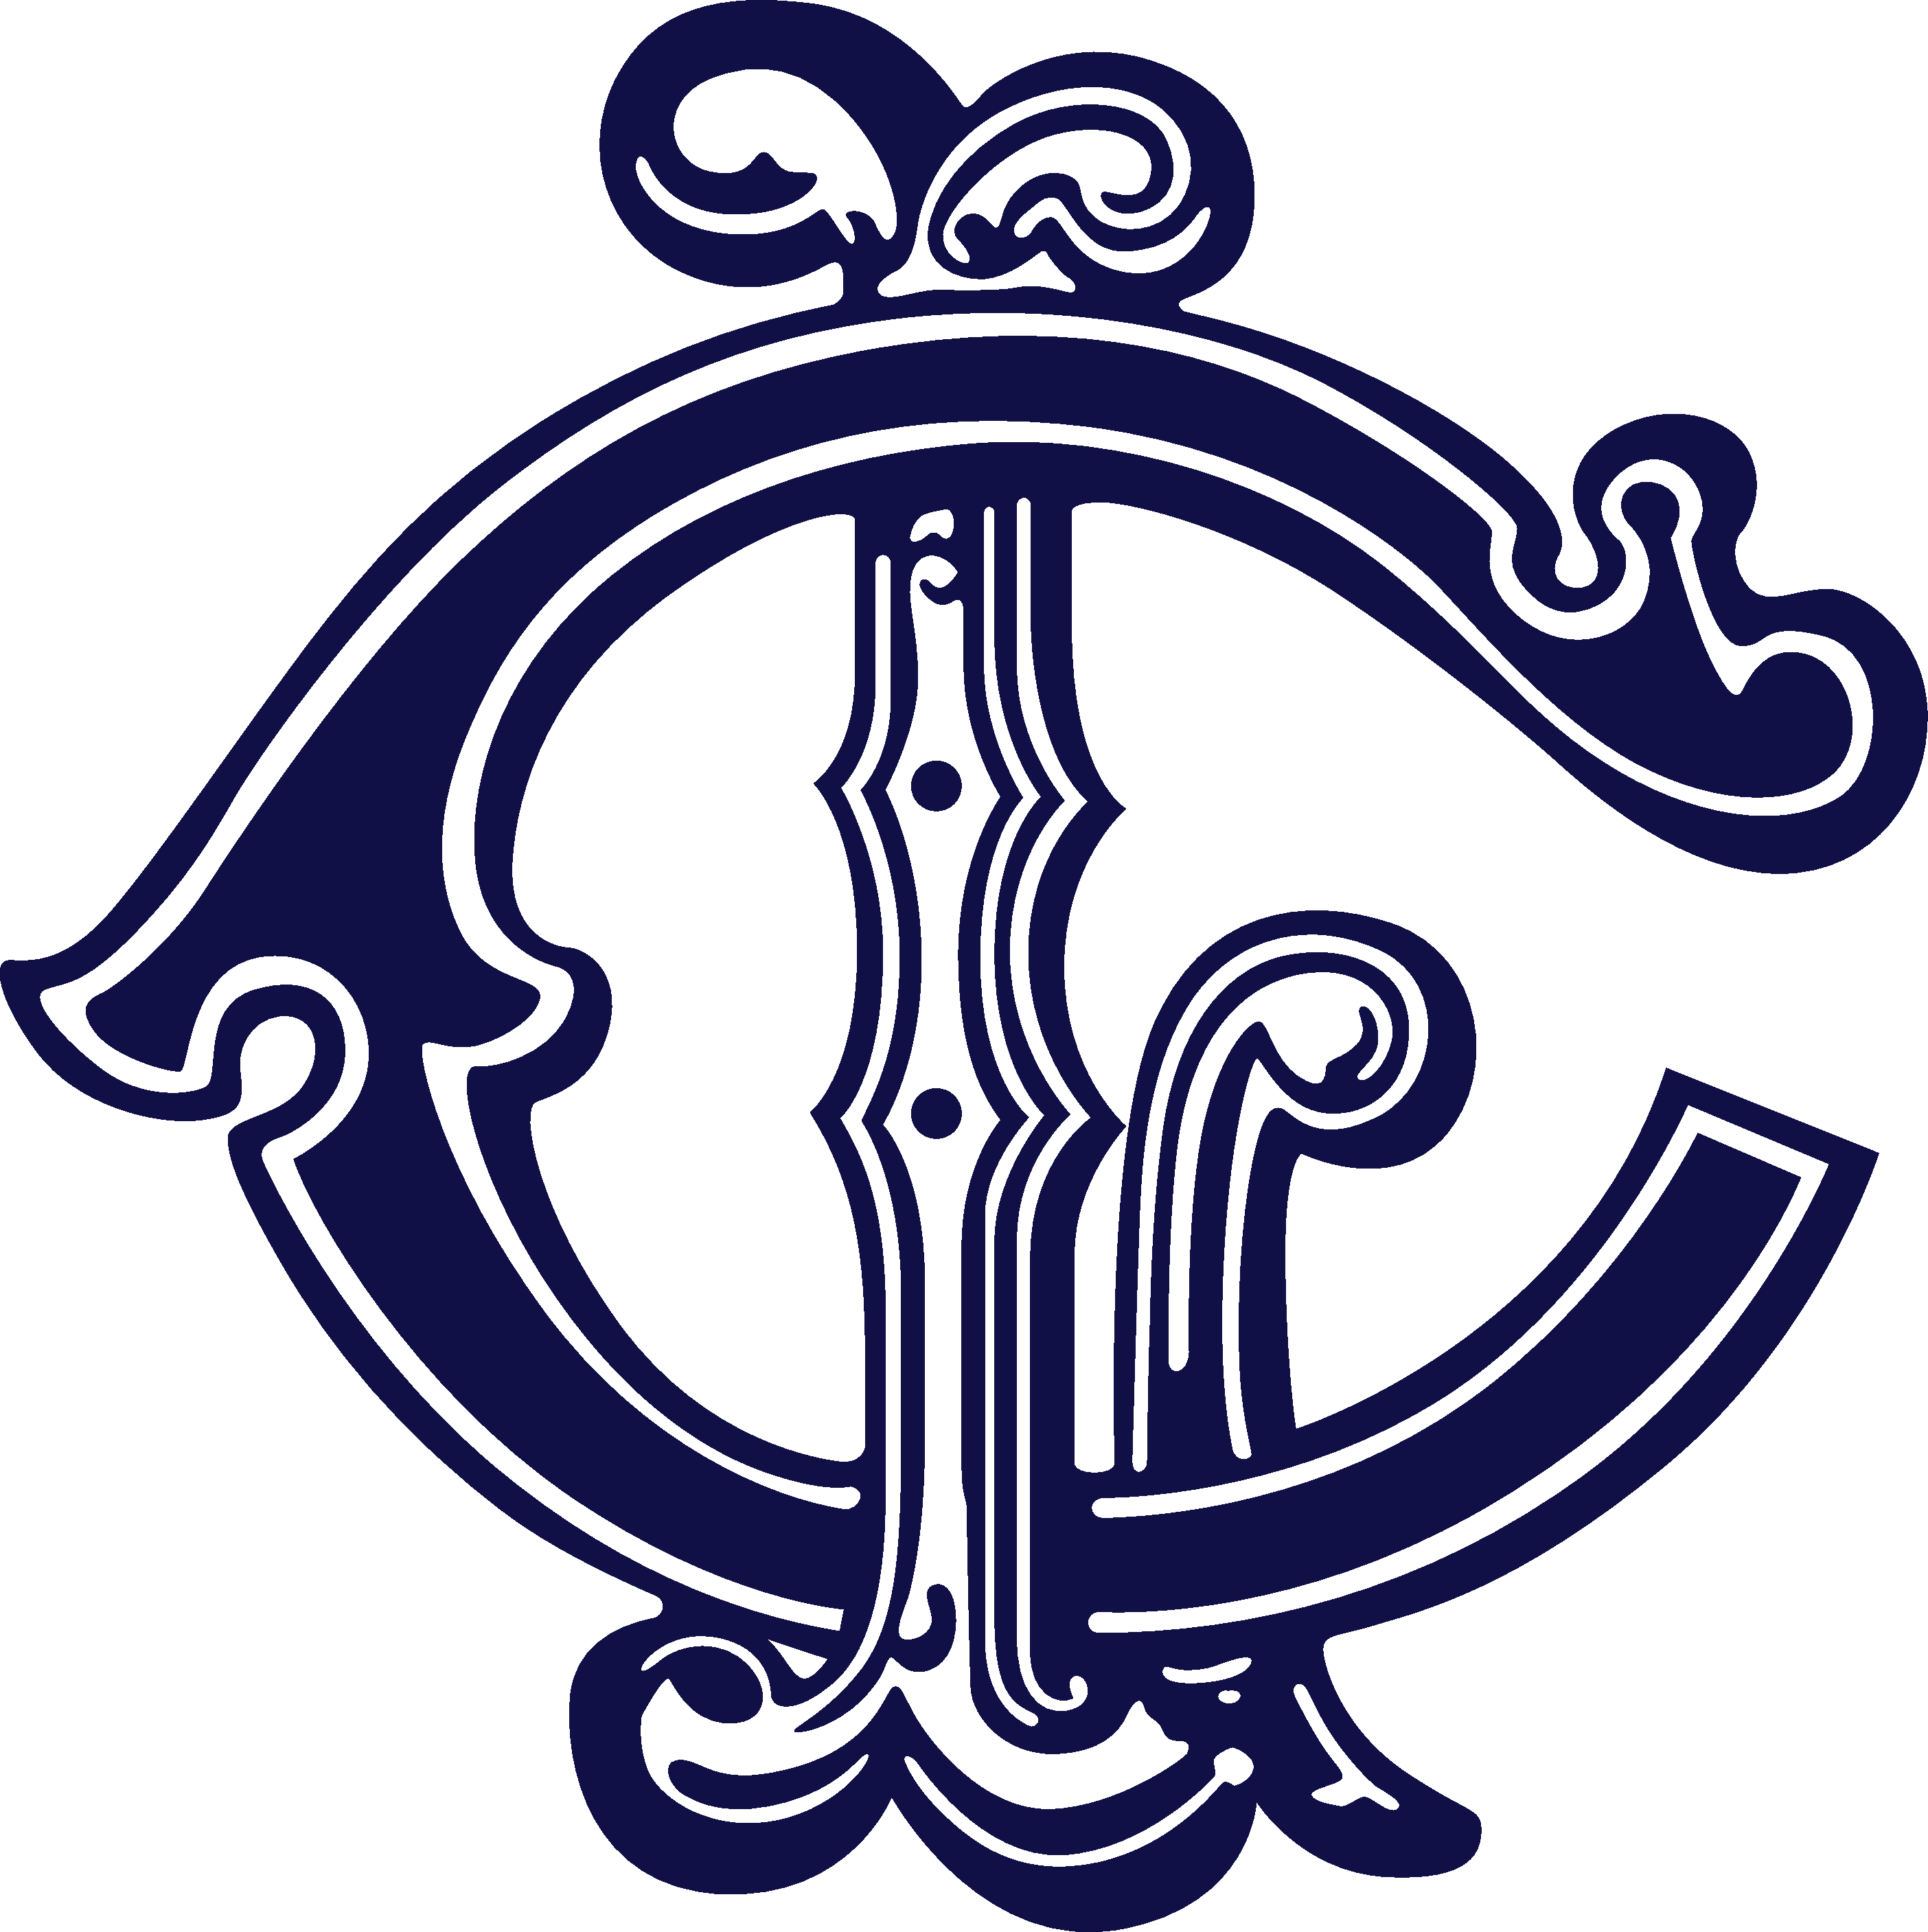 The Launceston Club Logo